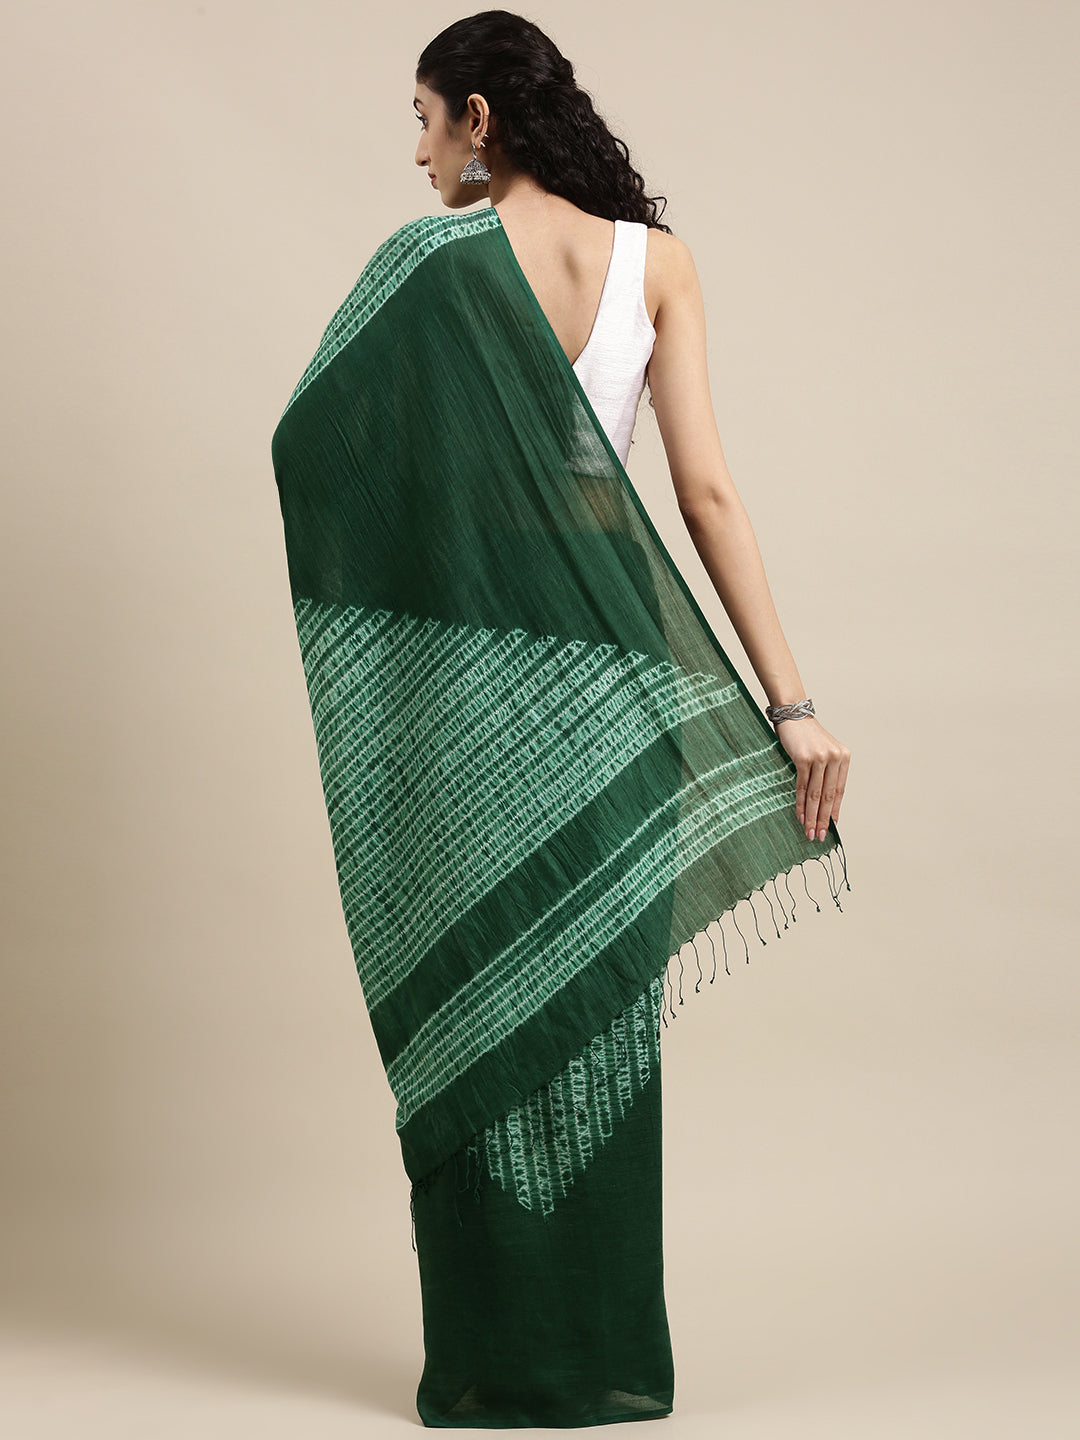 Green Woven Shibori Silk Cotton Saree